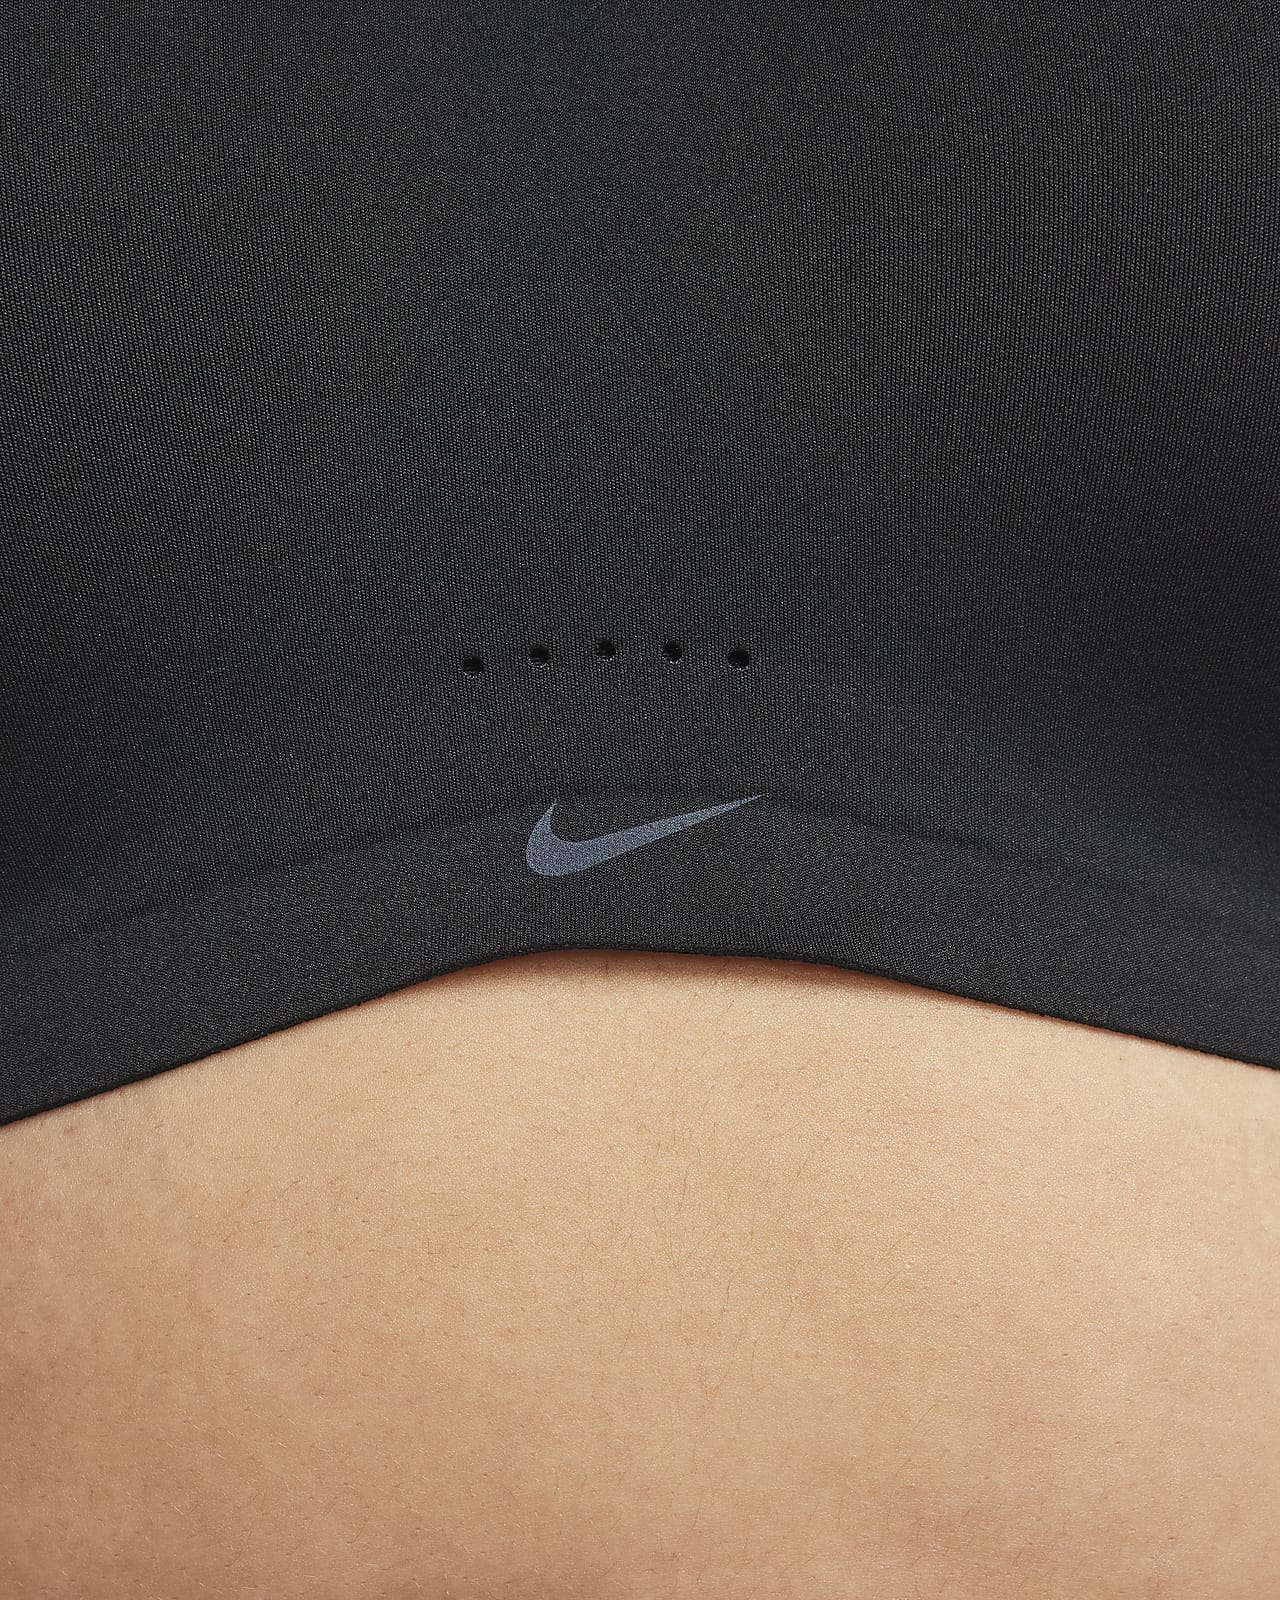 Nike Alate Coverage Women's Light-Support Padded Sports Bra.